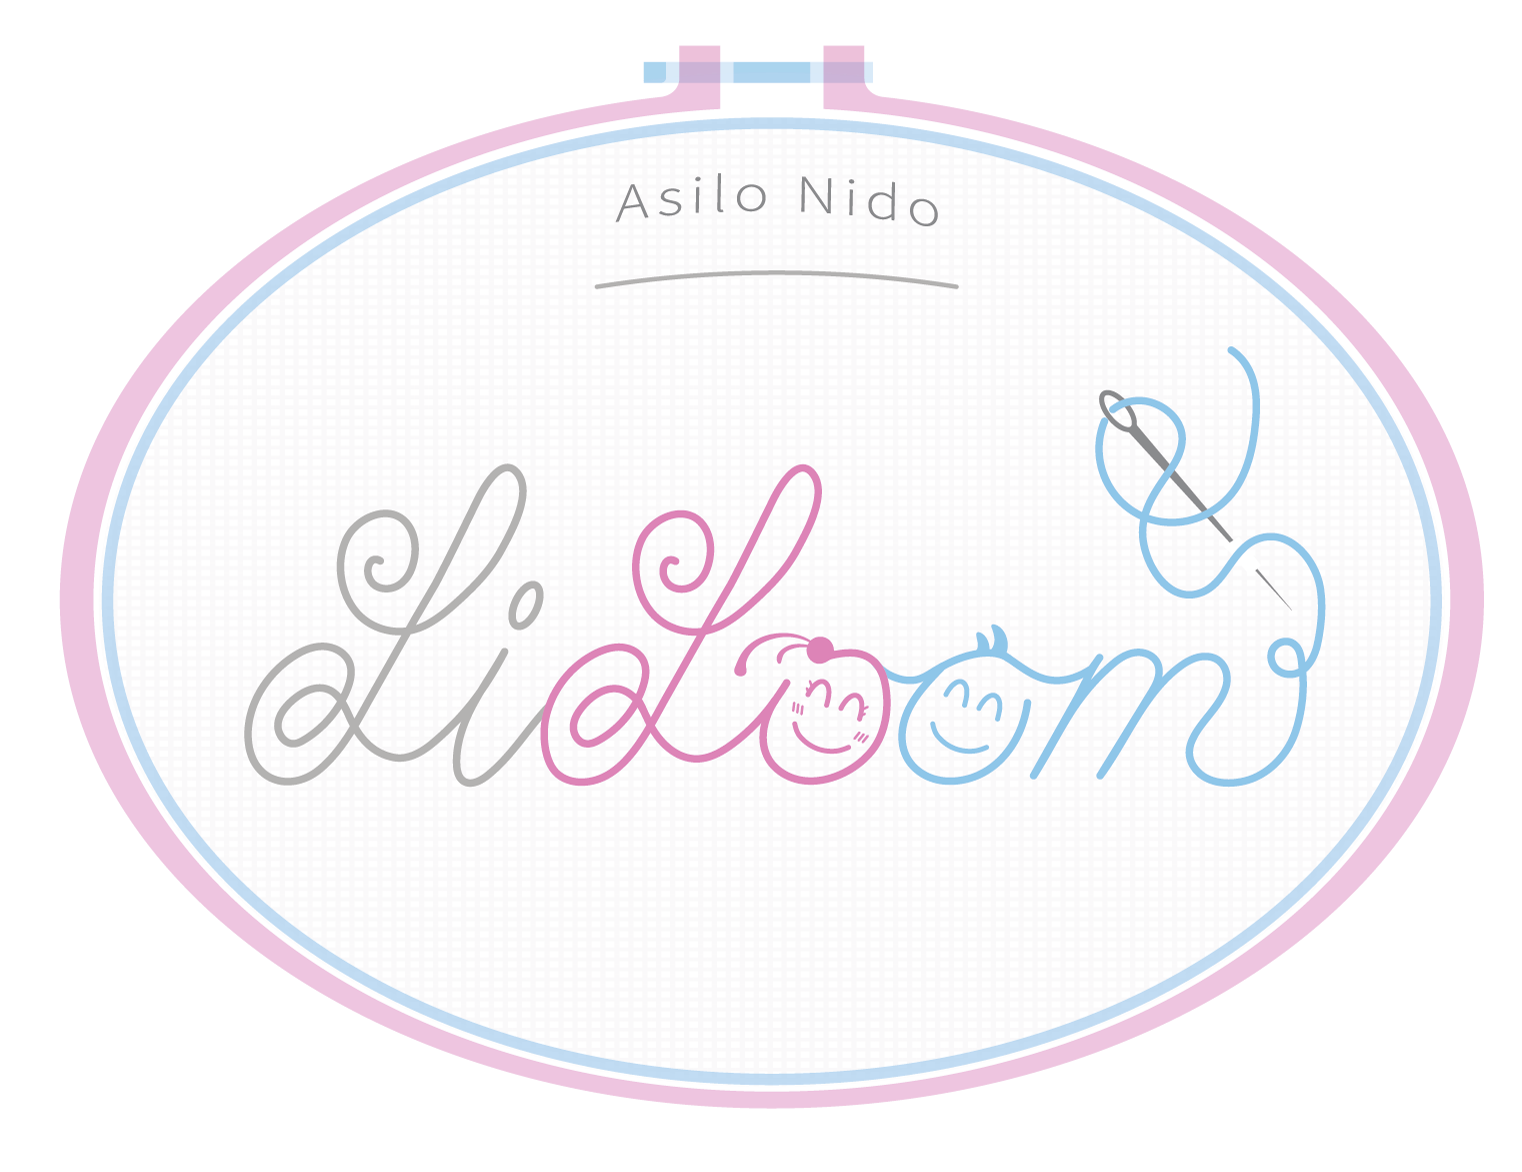 Asilo Nido Milano - LiLoom